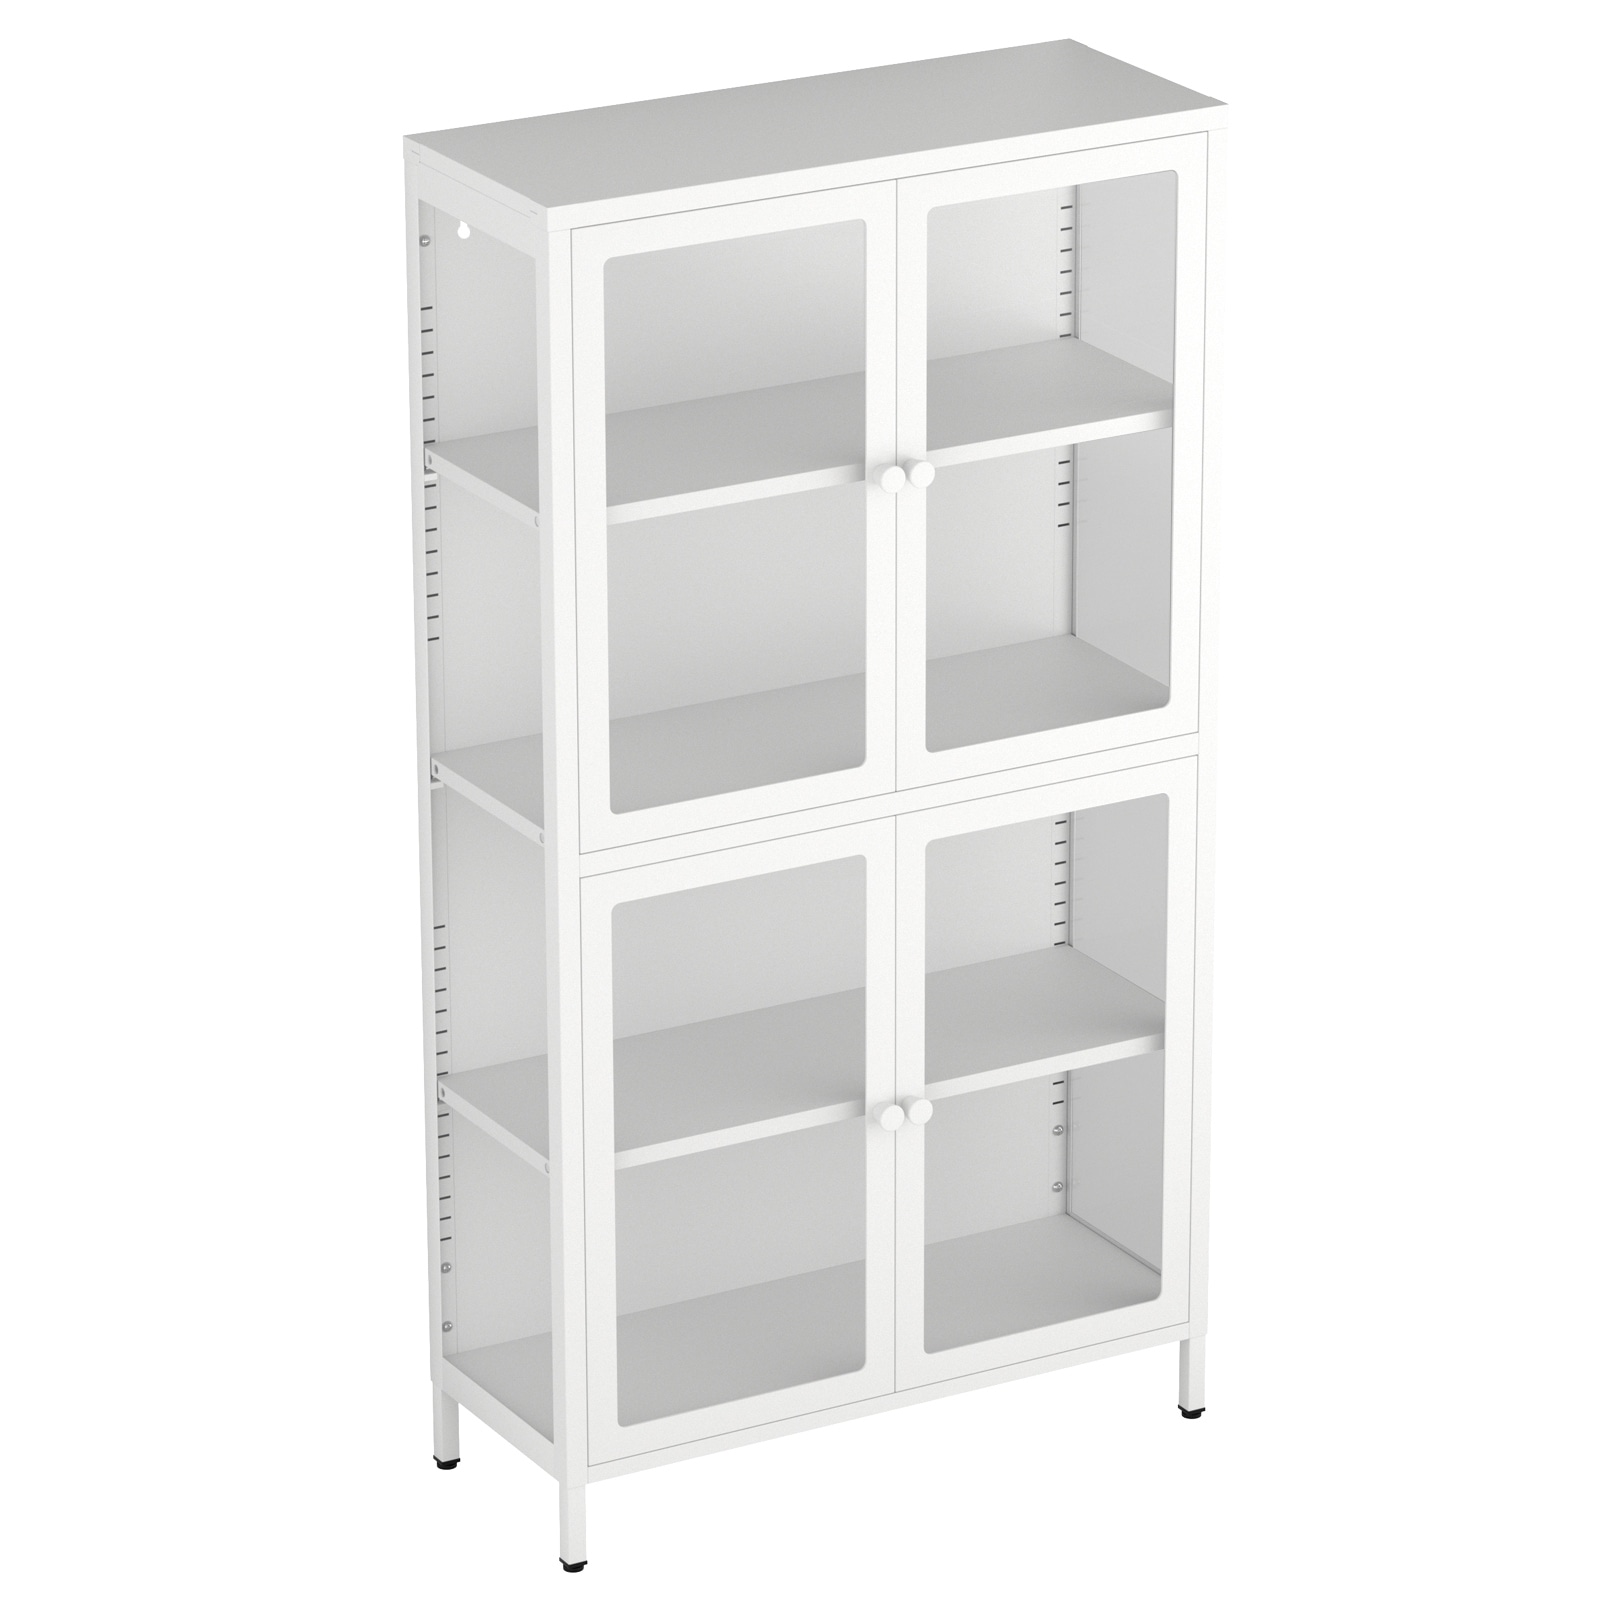 Four Glass Door Storage Cabinet with Adjustable Shelves